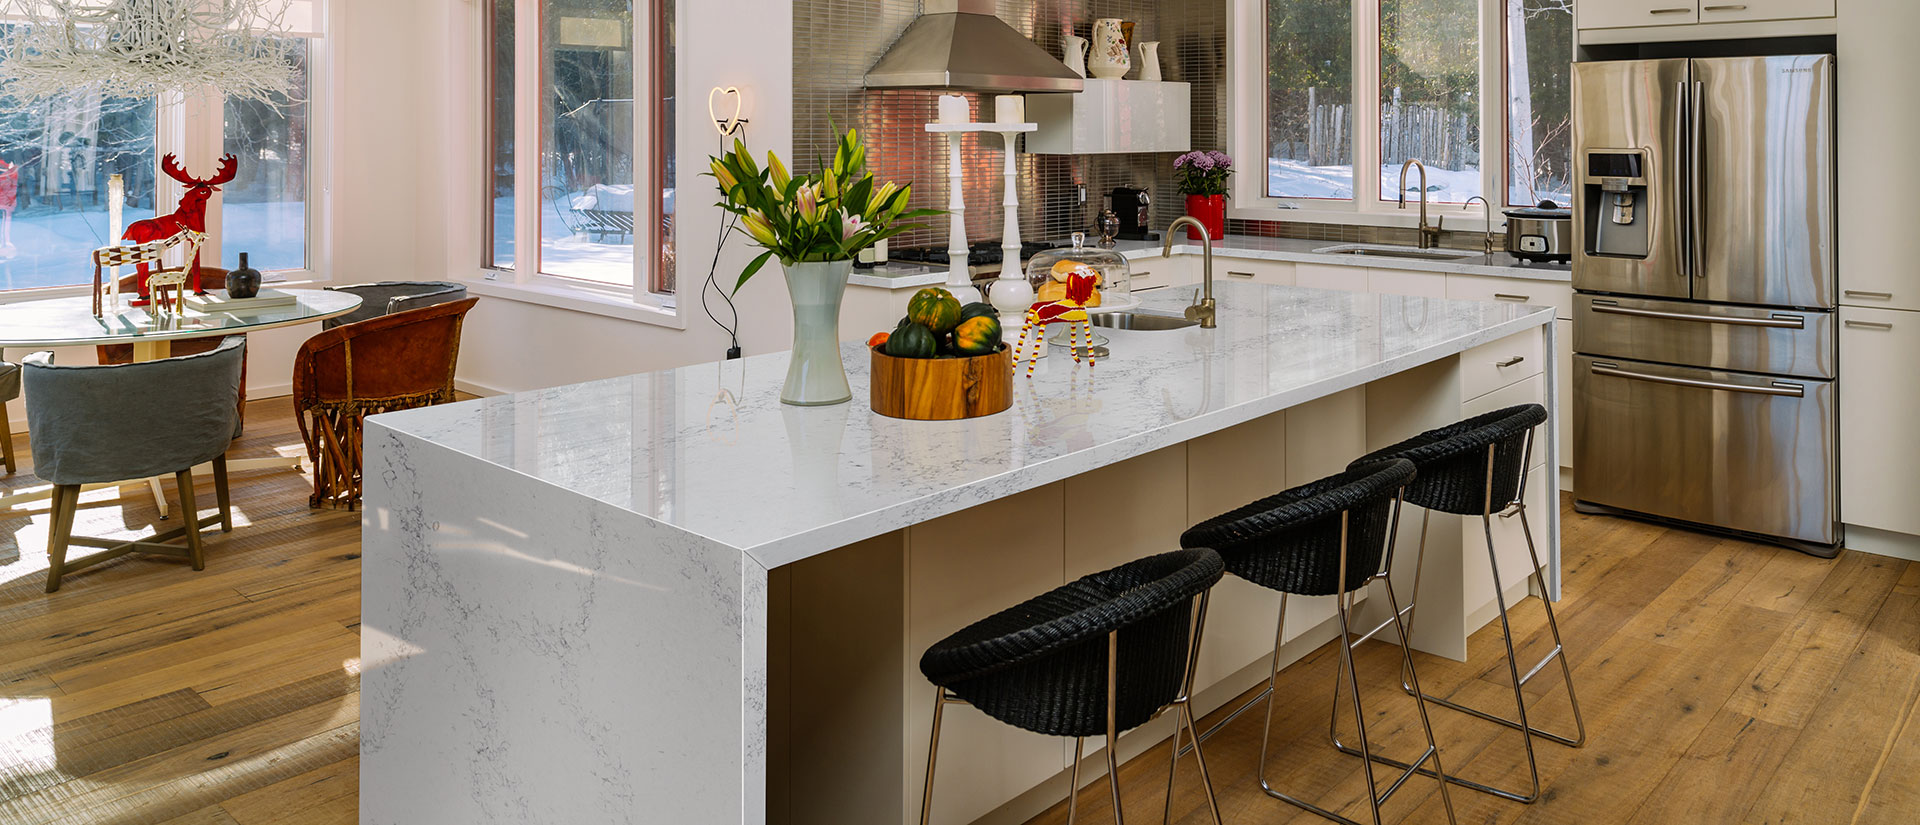 Calacatta Ida quartz countertop in a chic kitchen with wooden accents